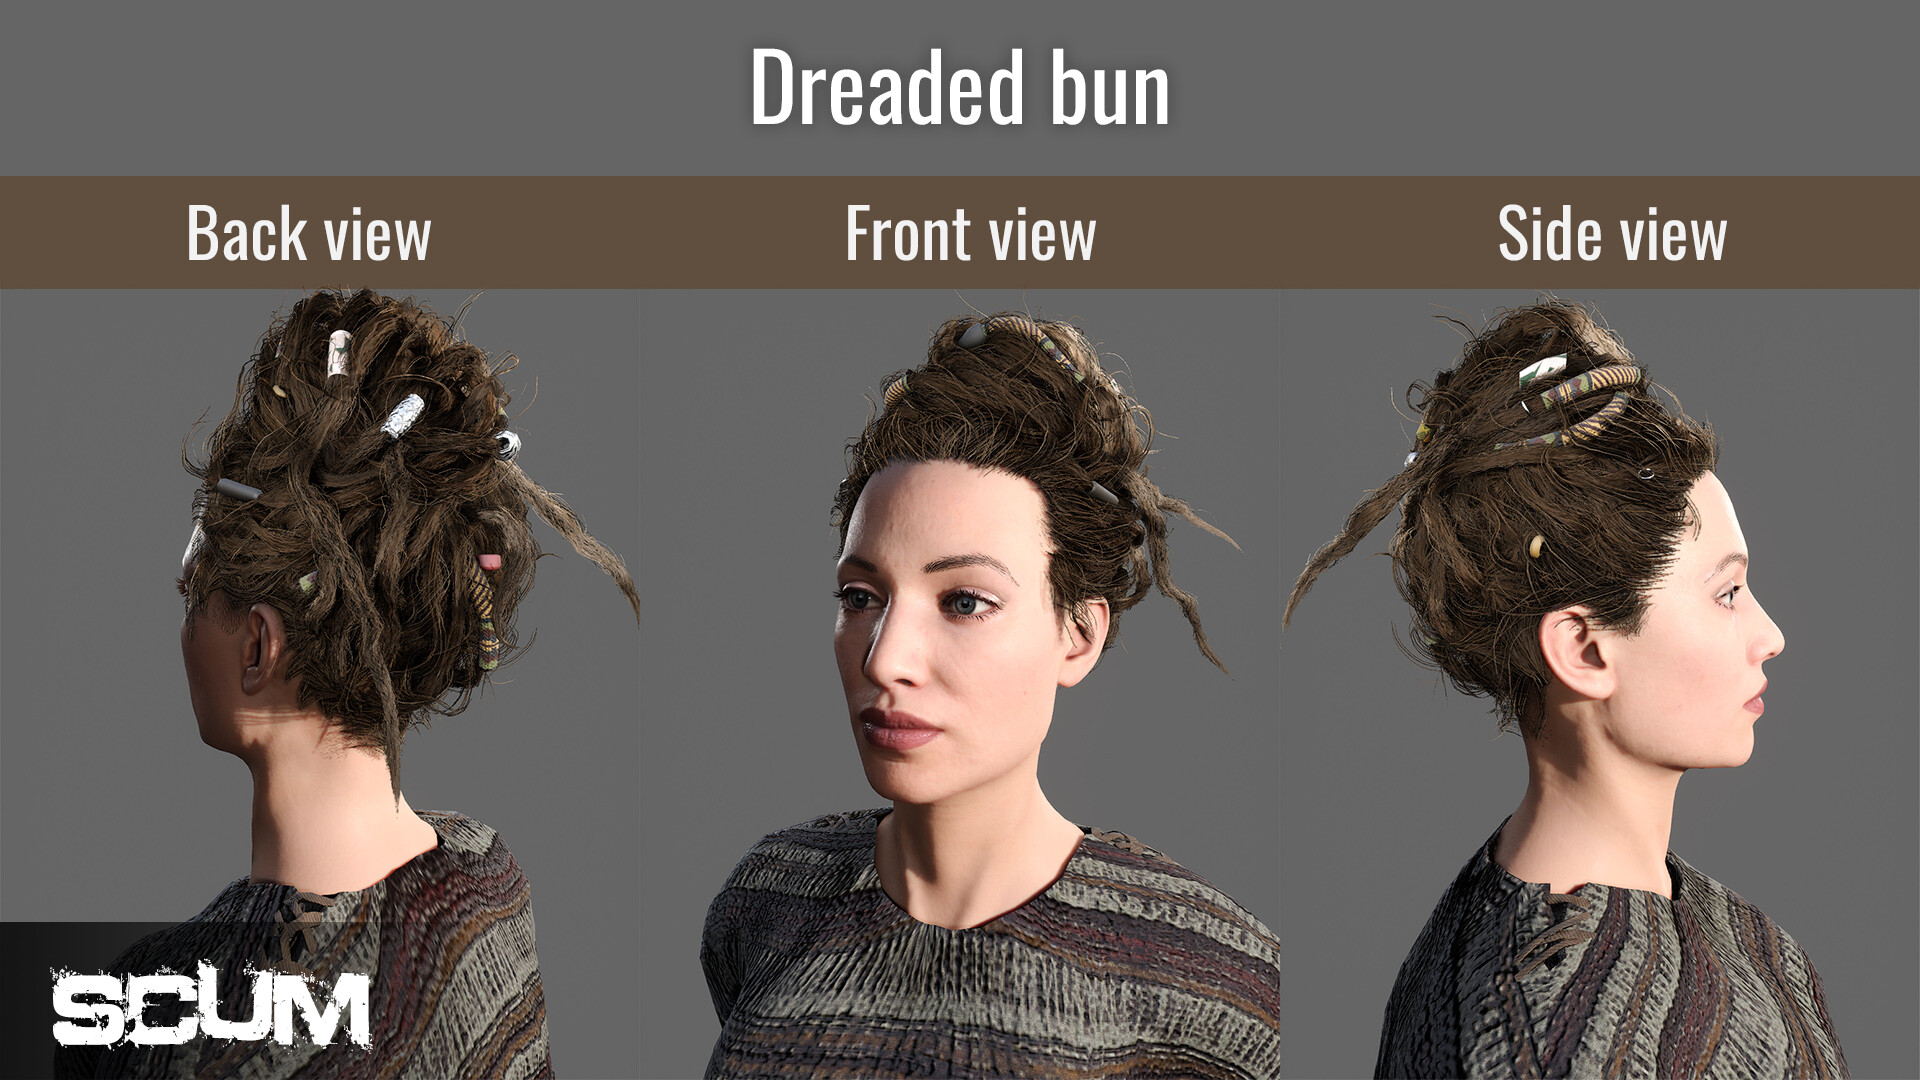 SCUM - Female Hair Pack DLC Steam CD Key